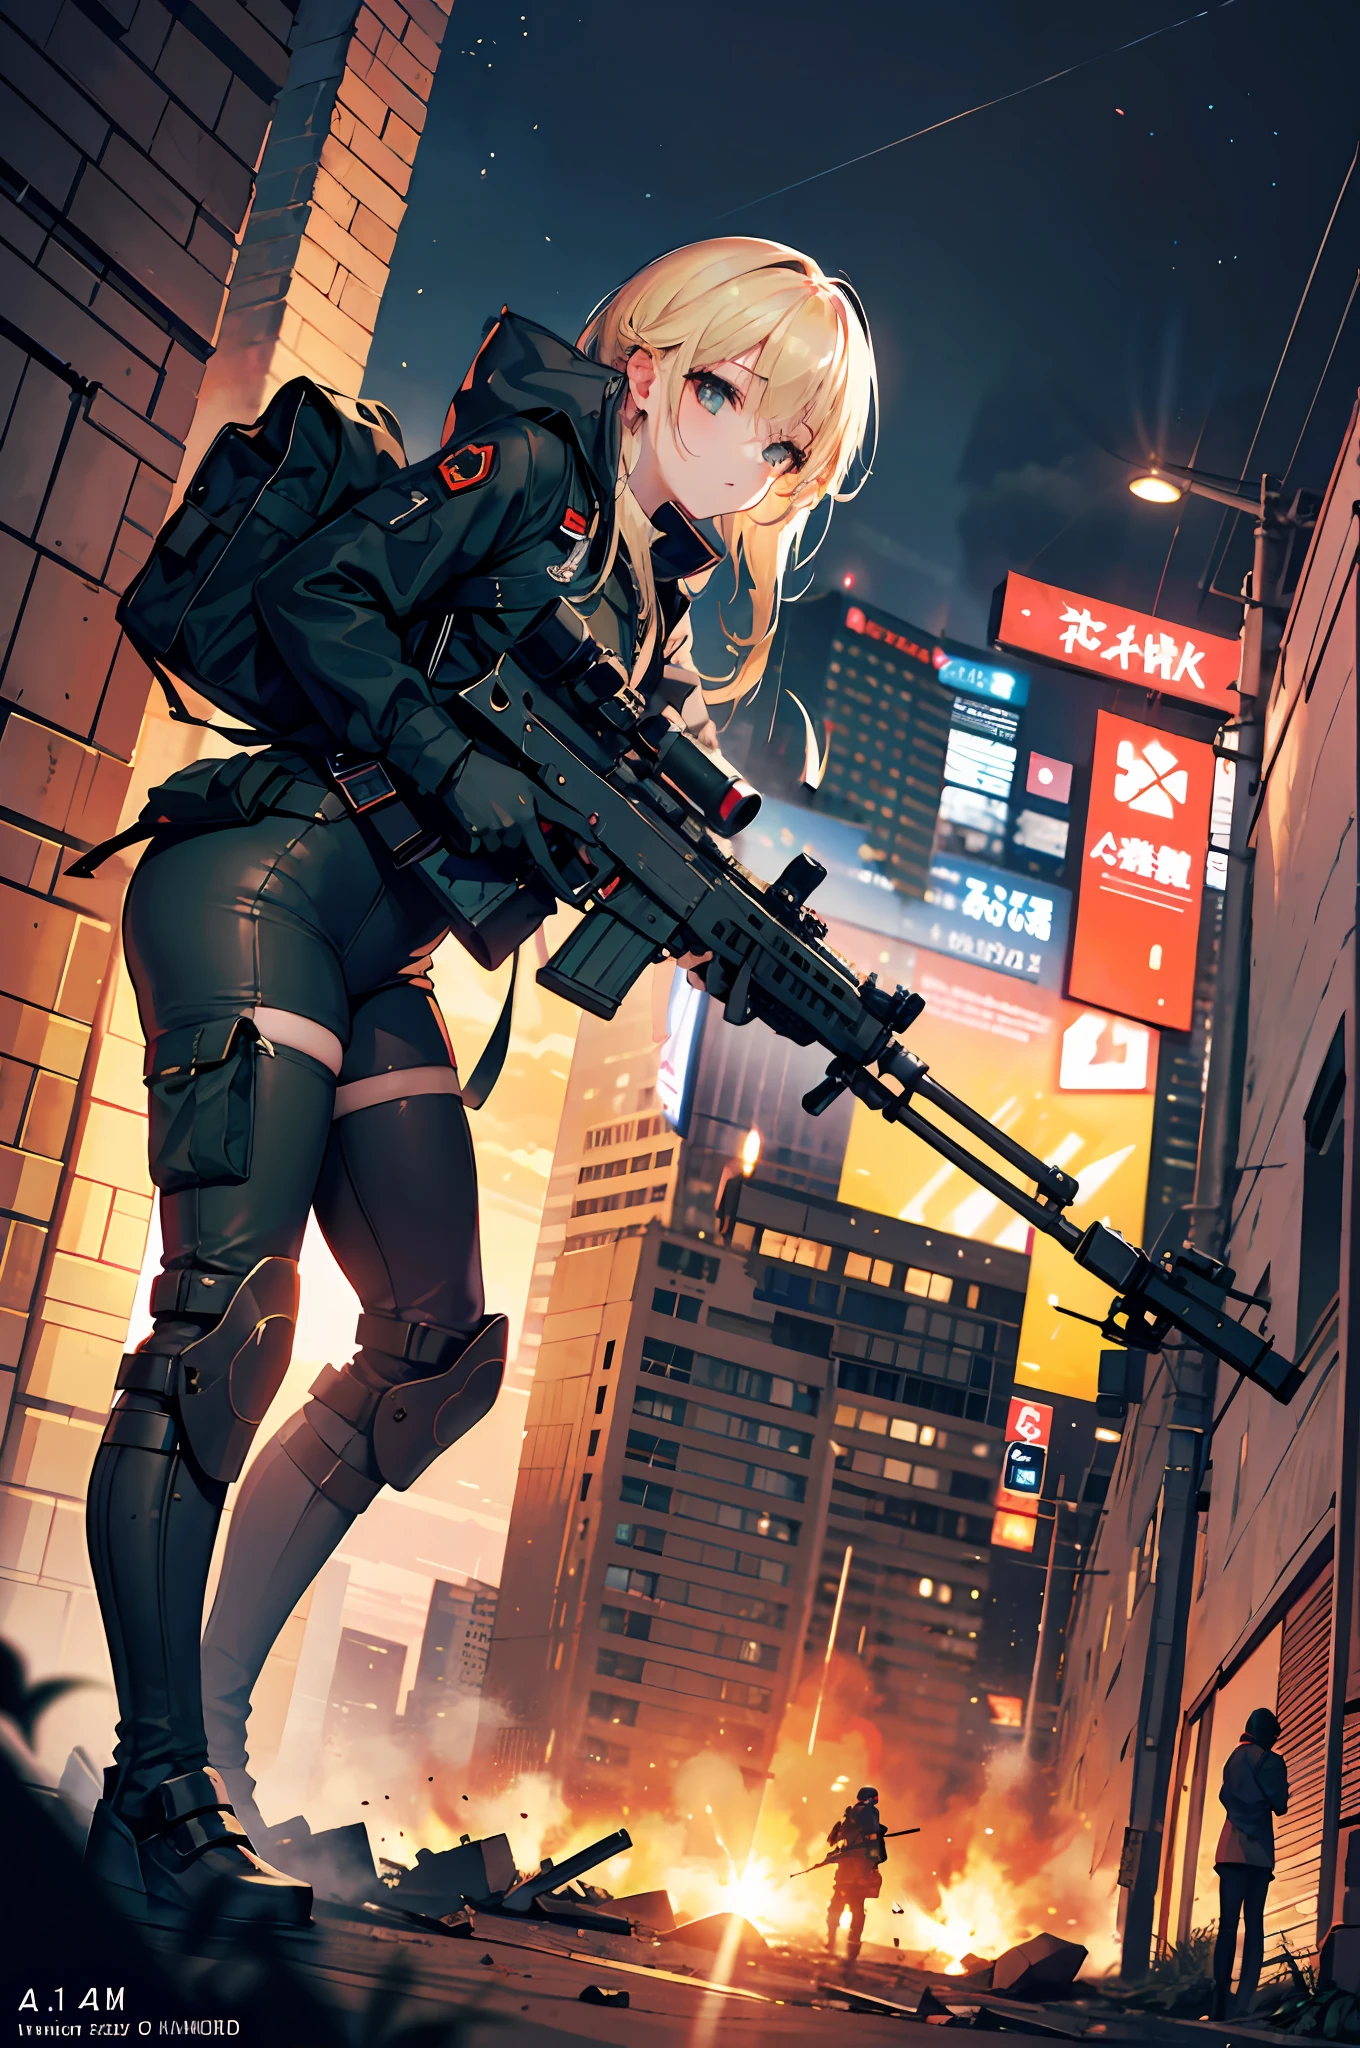 Shinjuku en feu, nuit, grand fusil